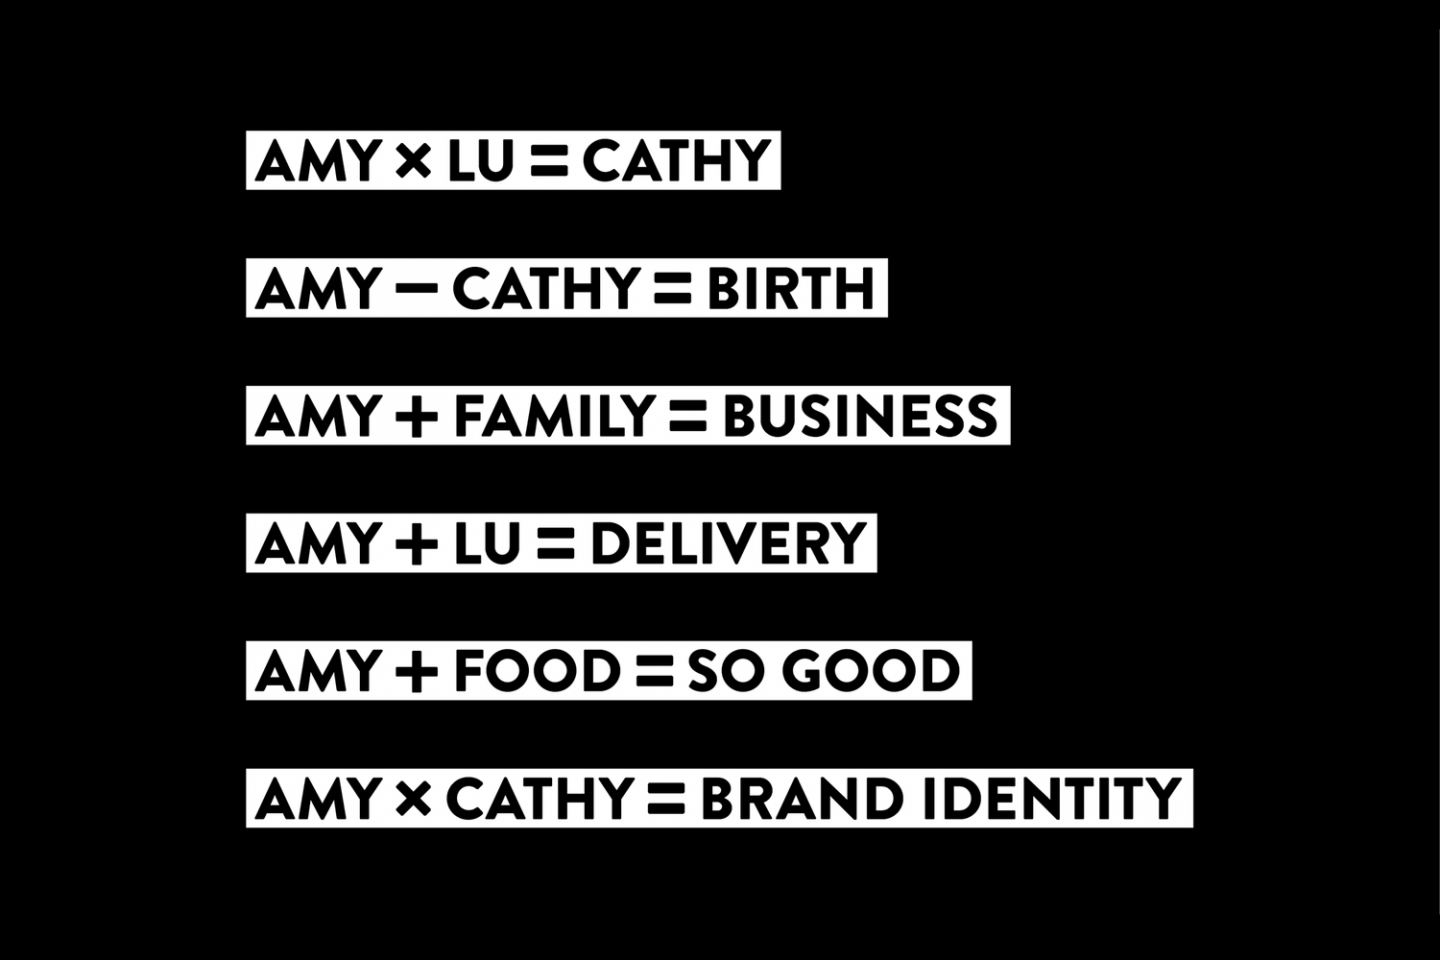 Amy × Cathy